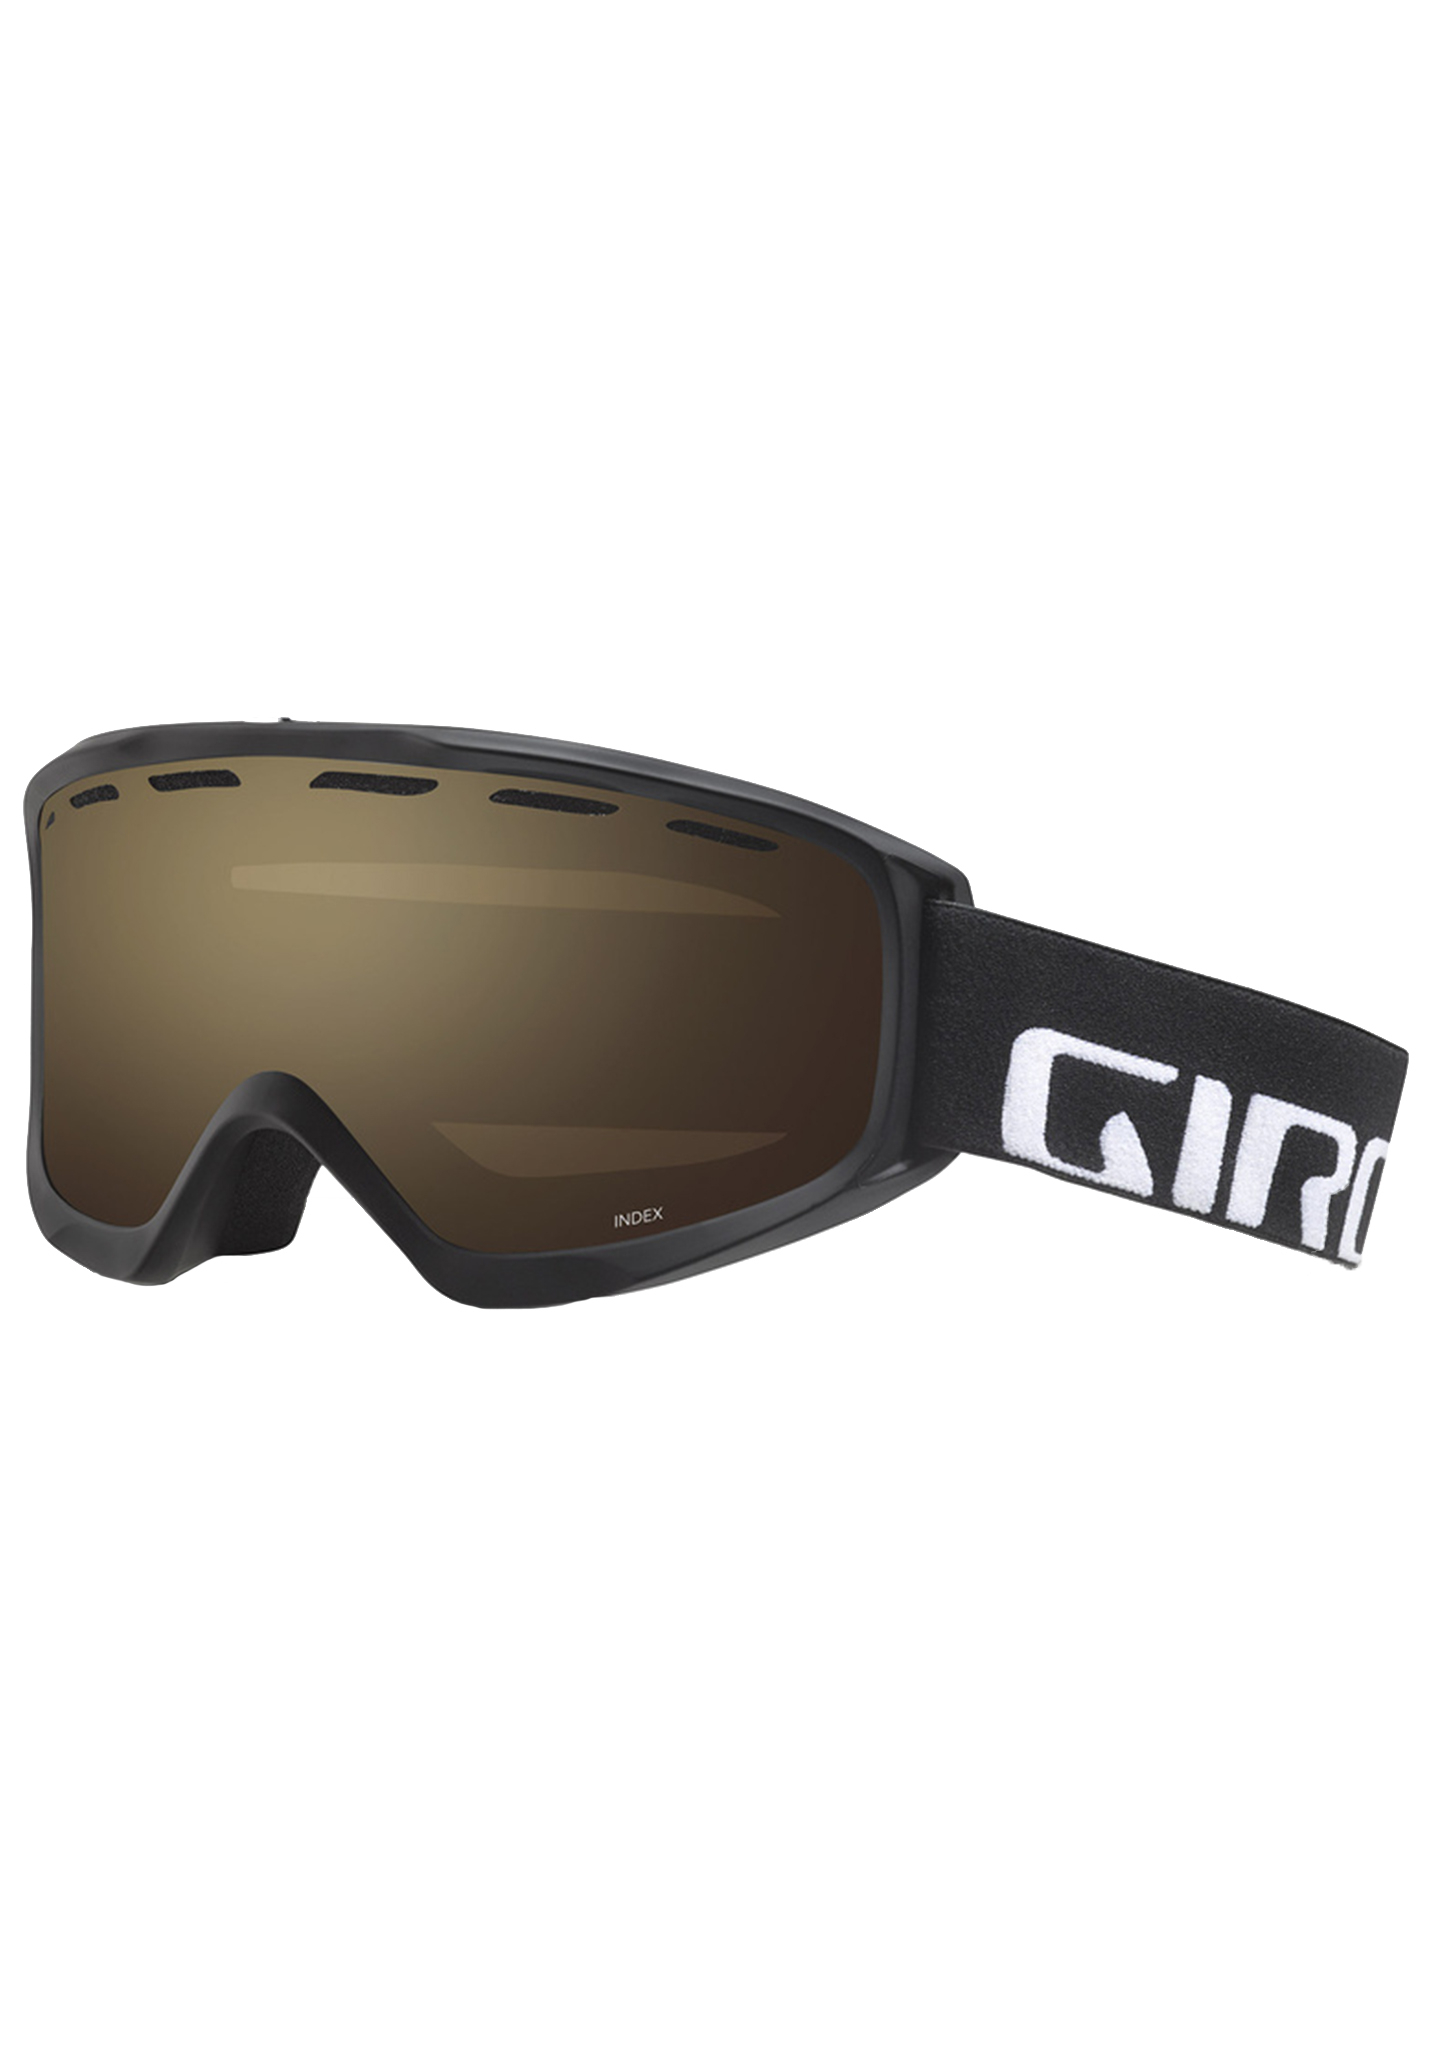 Giro Index Snowboardbrillen schwarze wortmarke/amber rose One Size